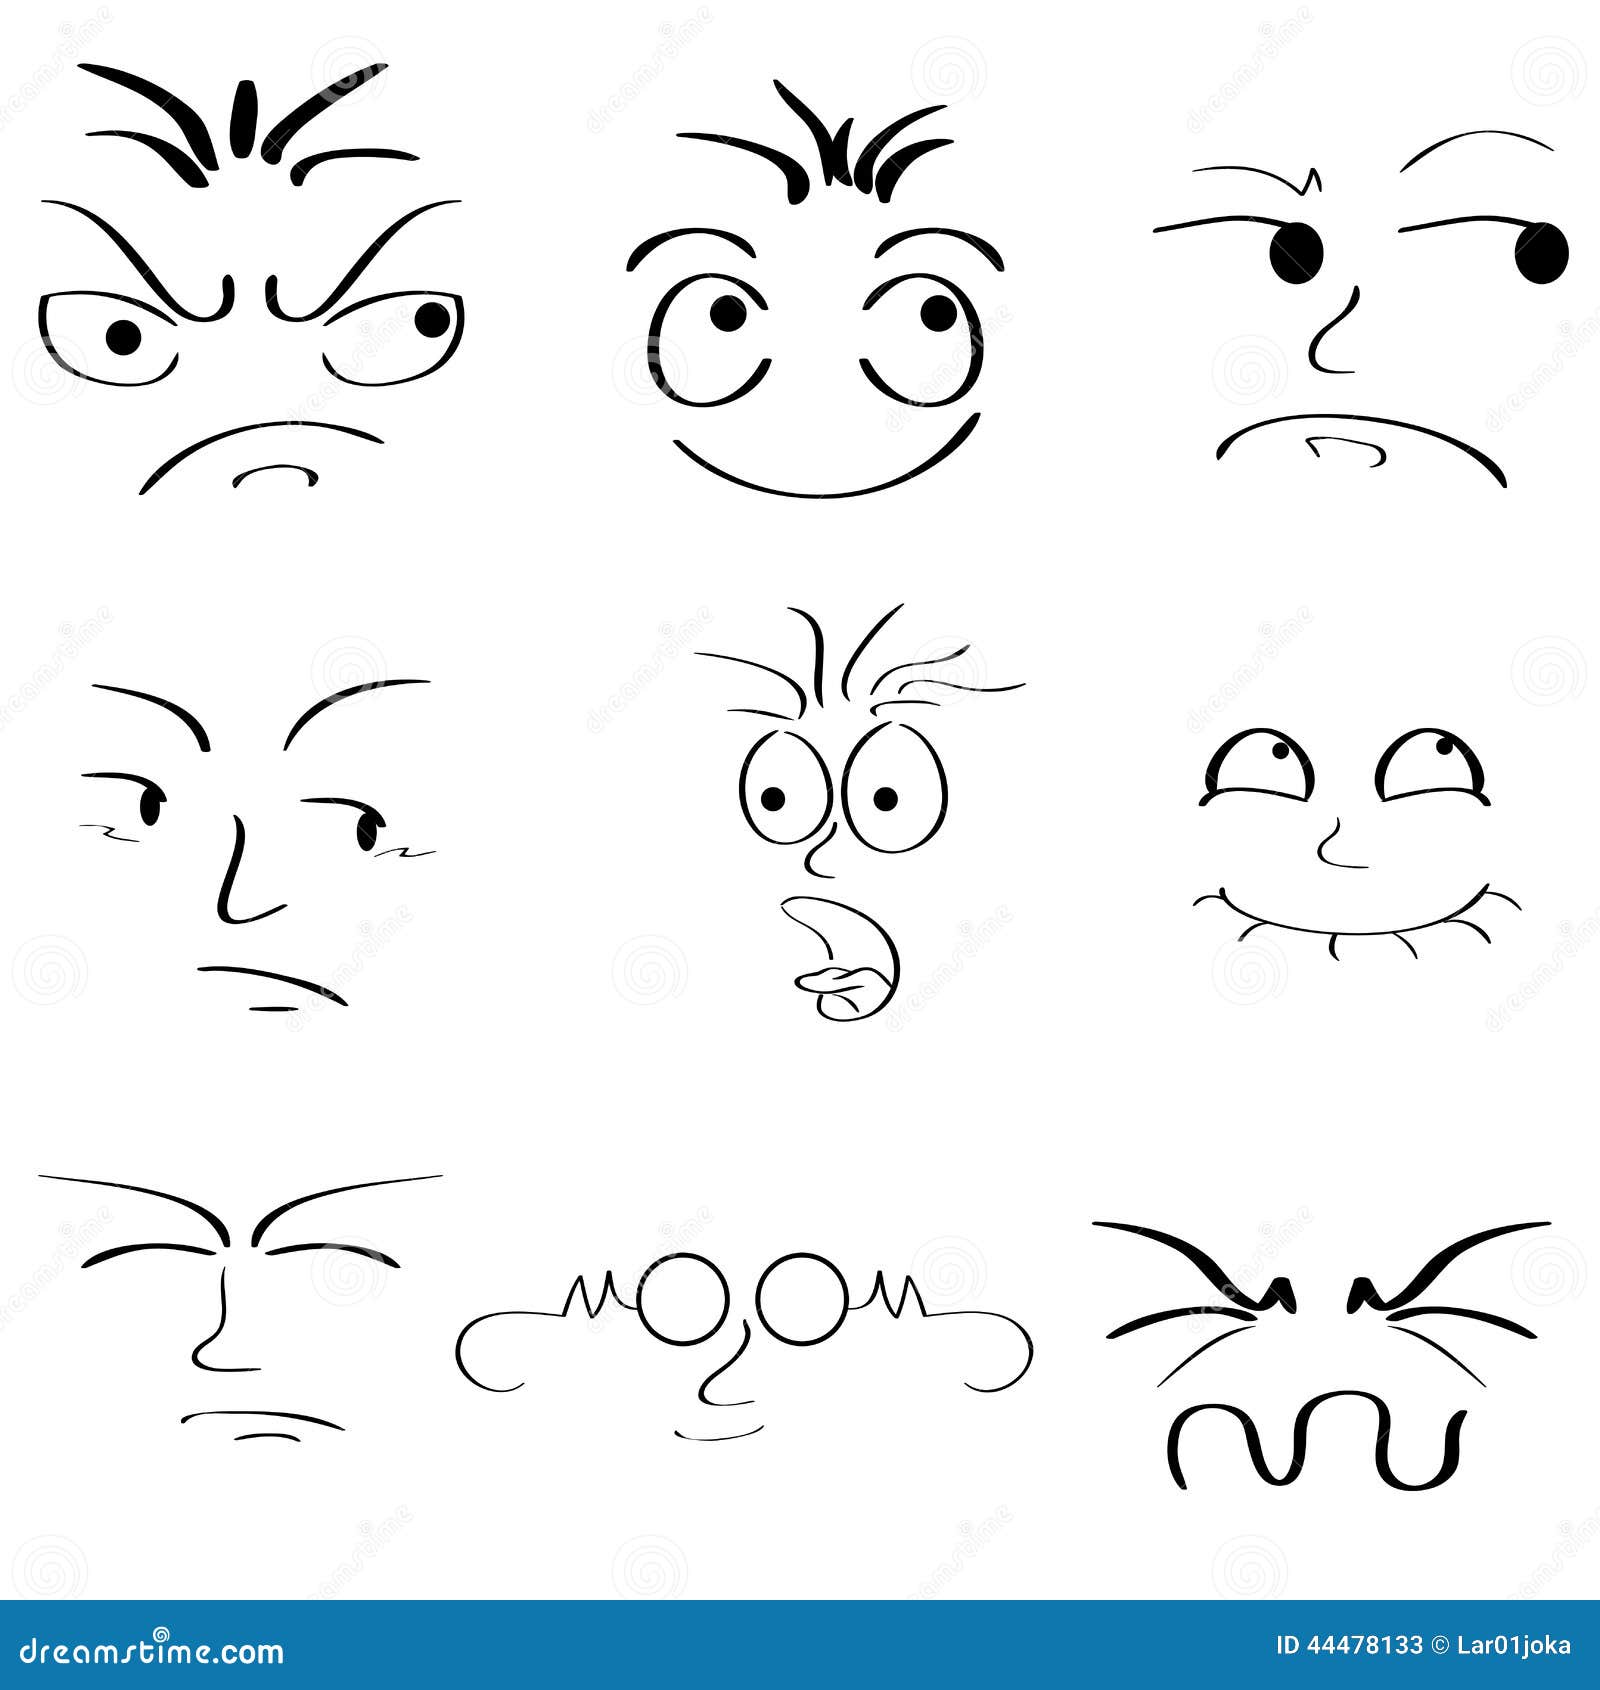 Facial expressions stock illustration. Illustration of drawn - 44478133